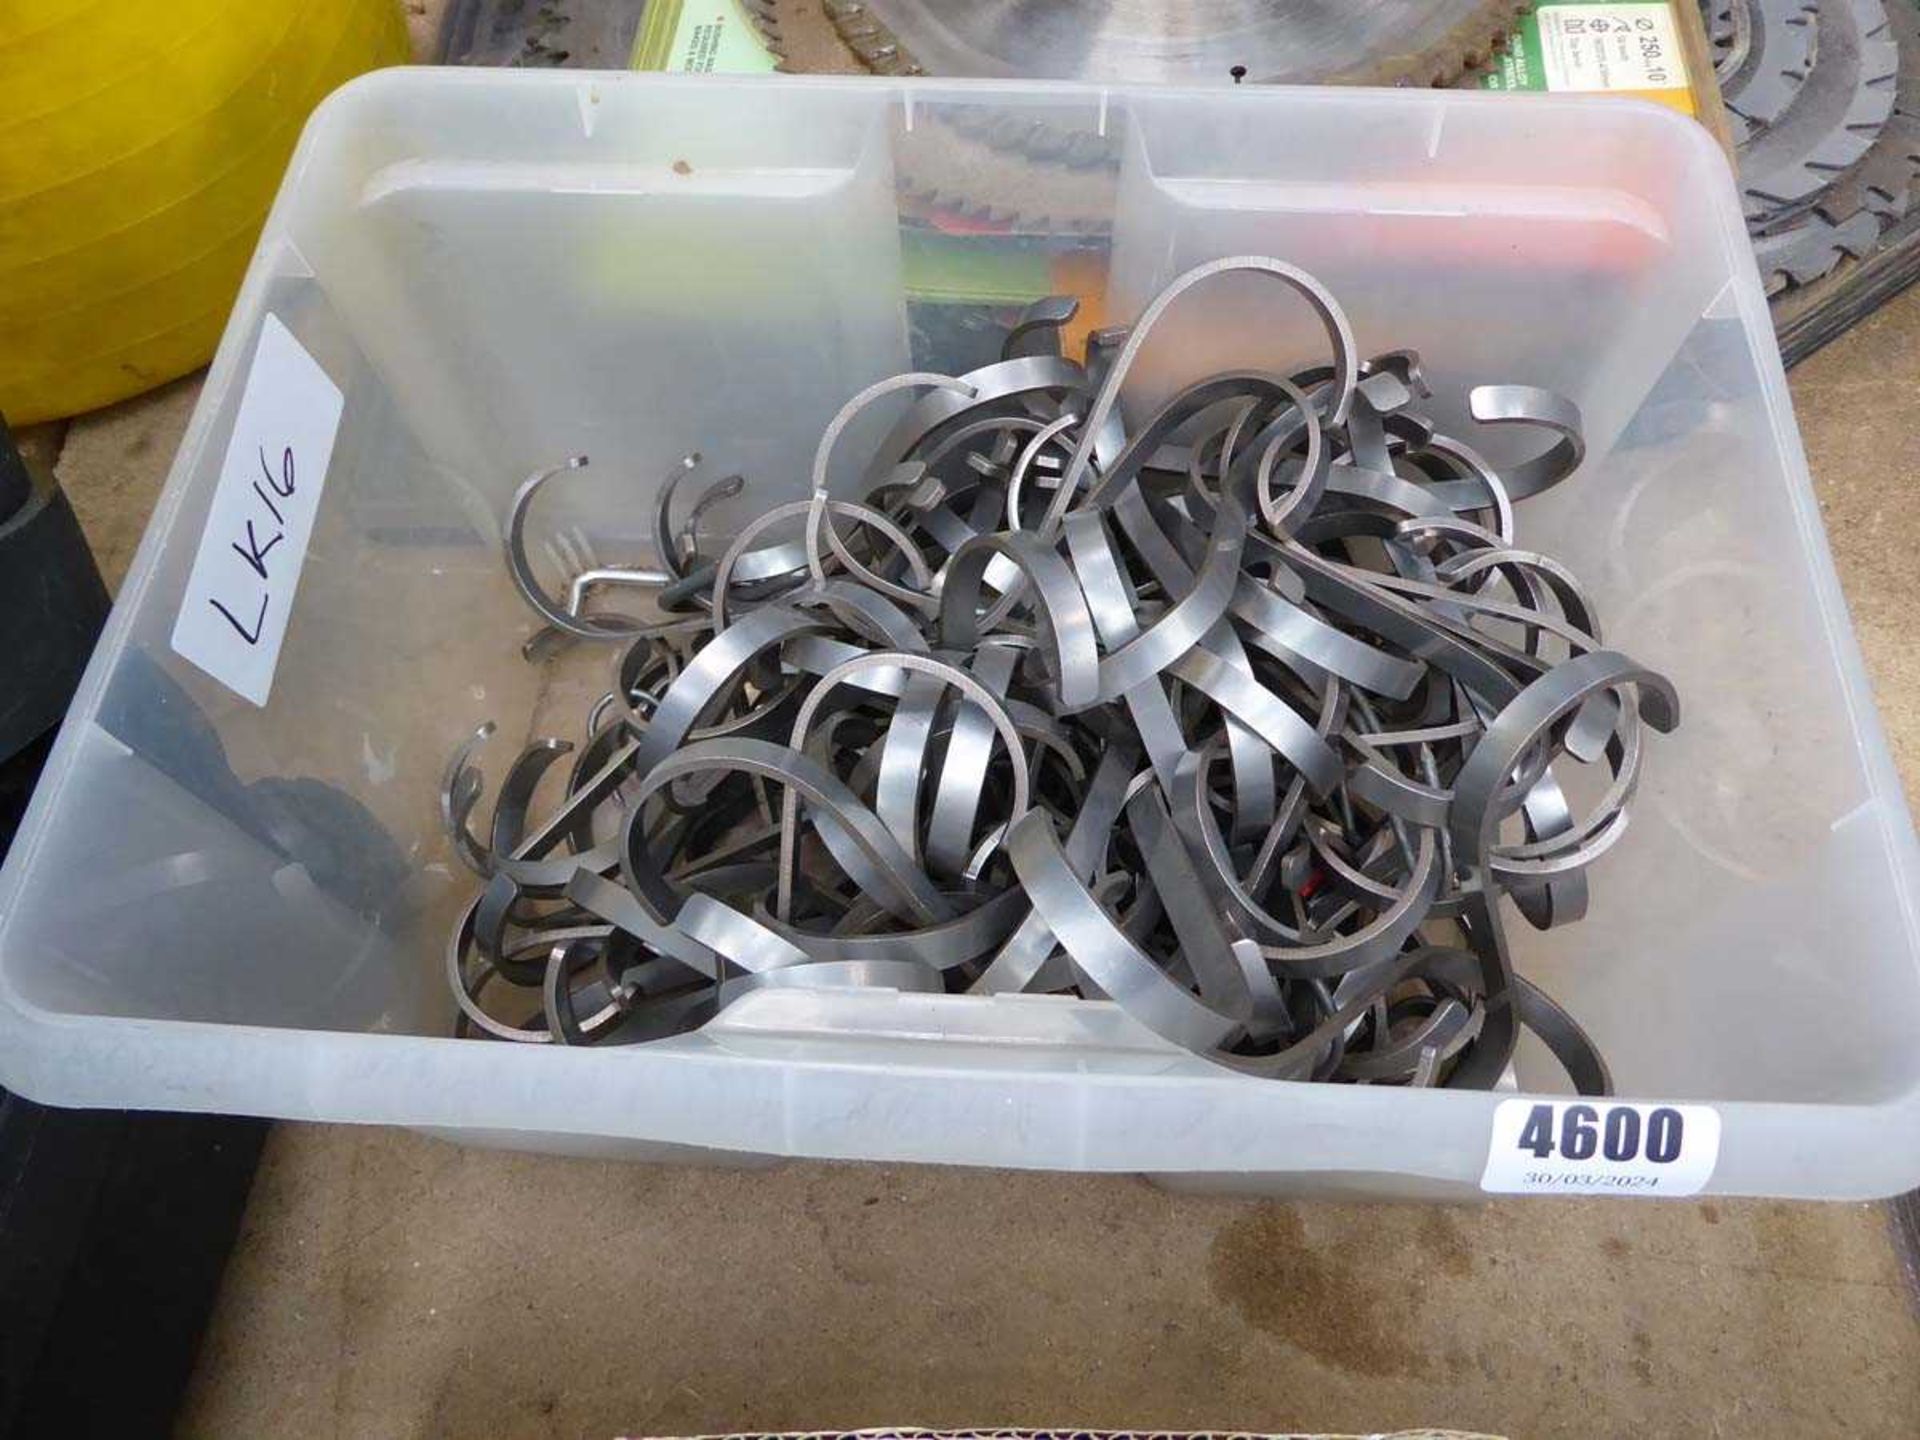 Box of metal S-hooks